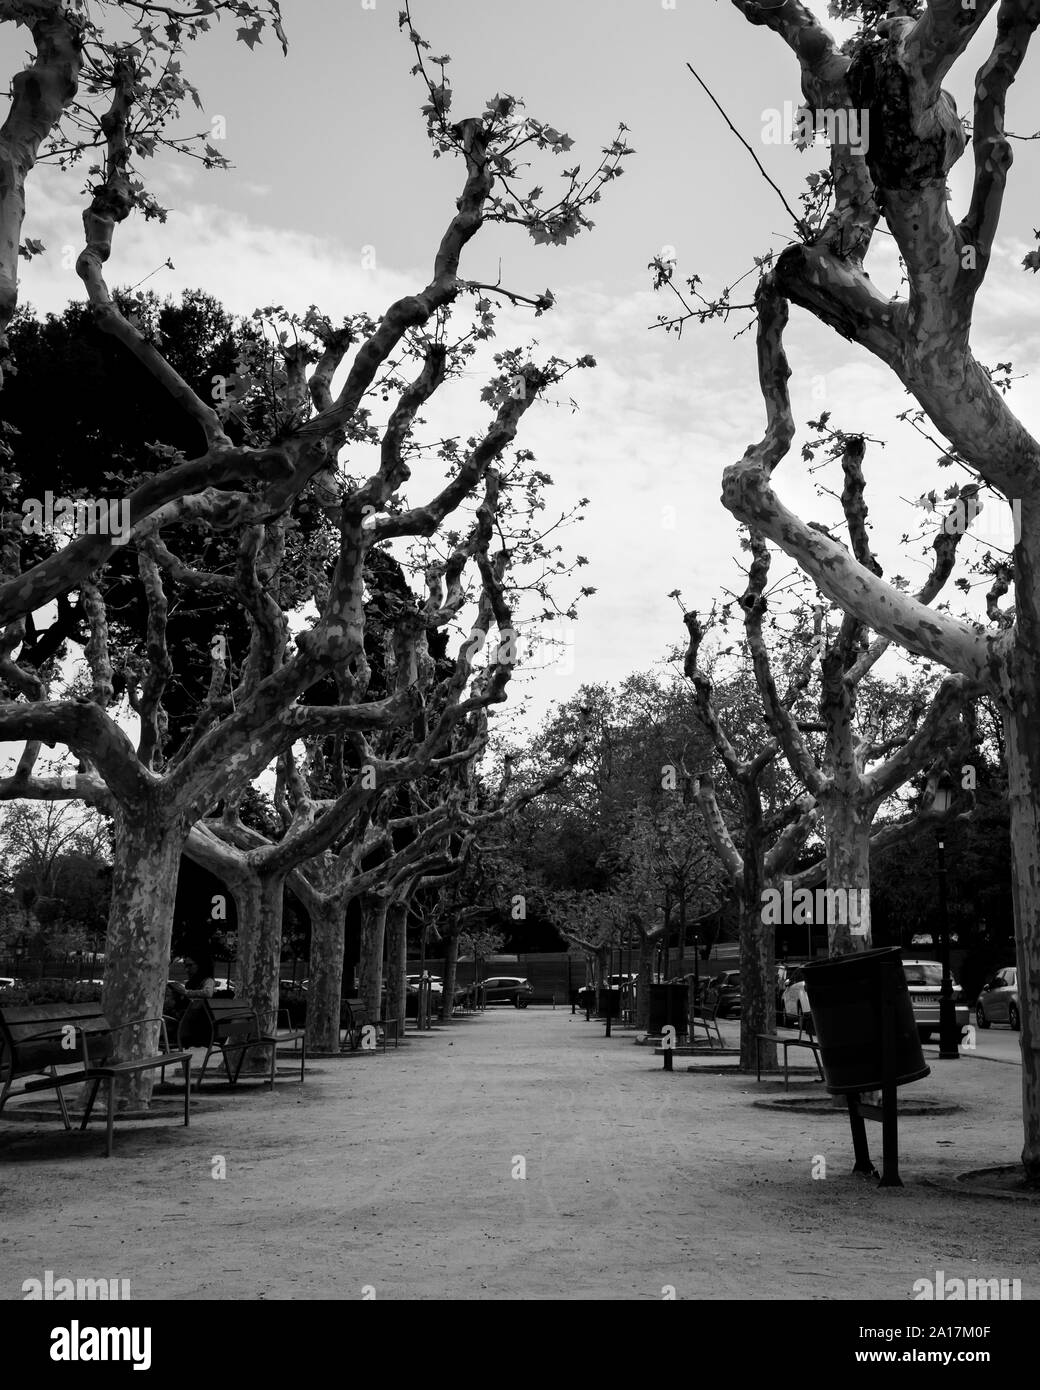 Vieux arbres morts Banque D'Images